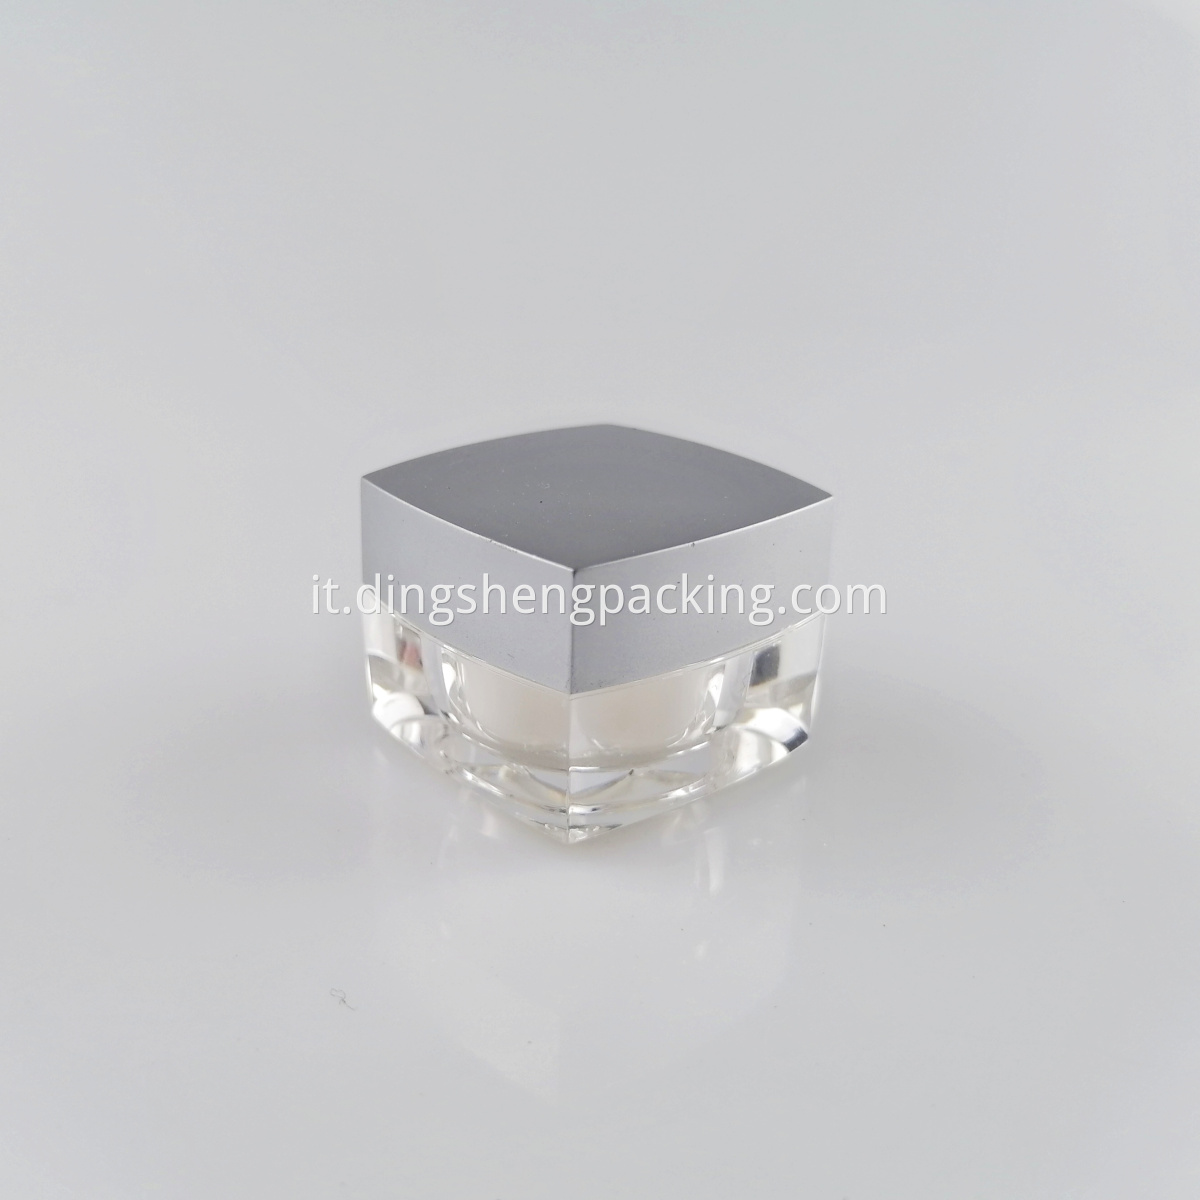 Black Clear Square Acrylic Cream Jar